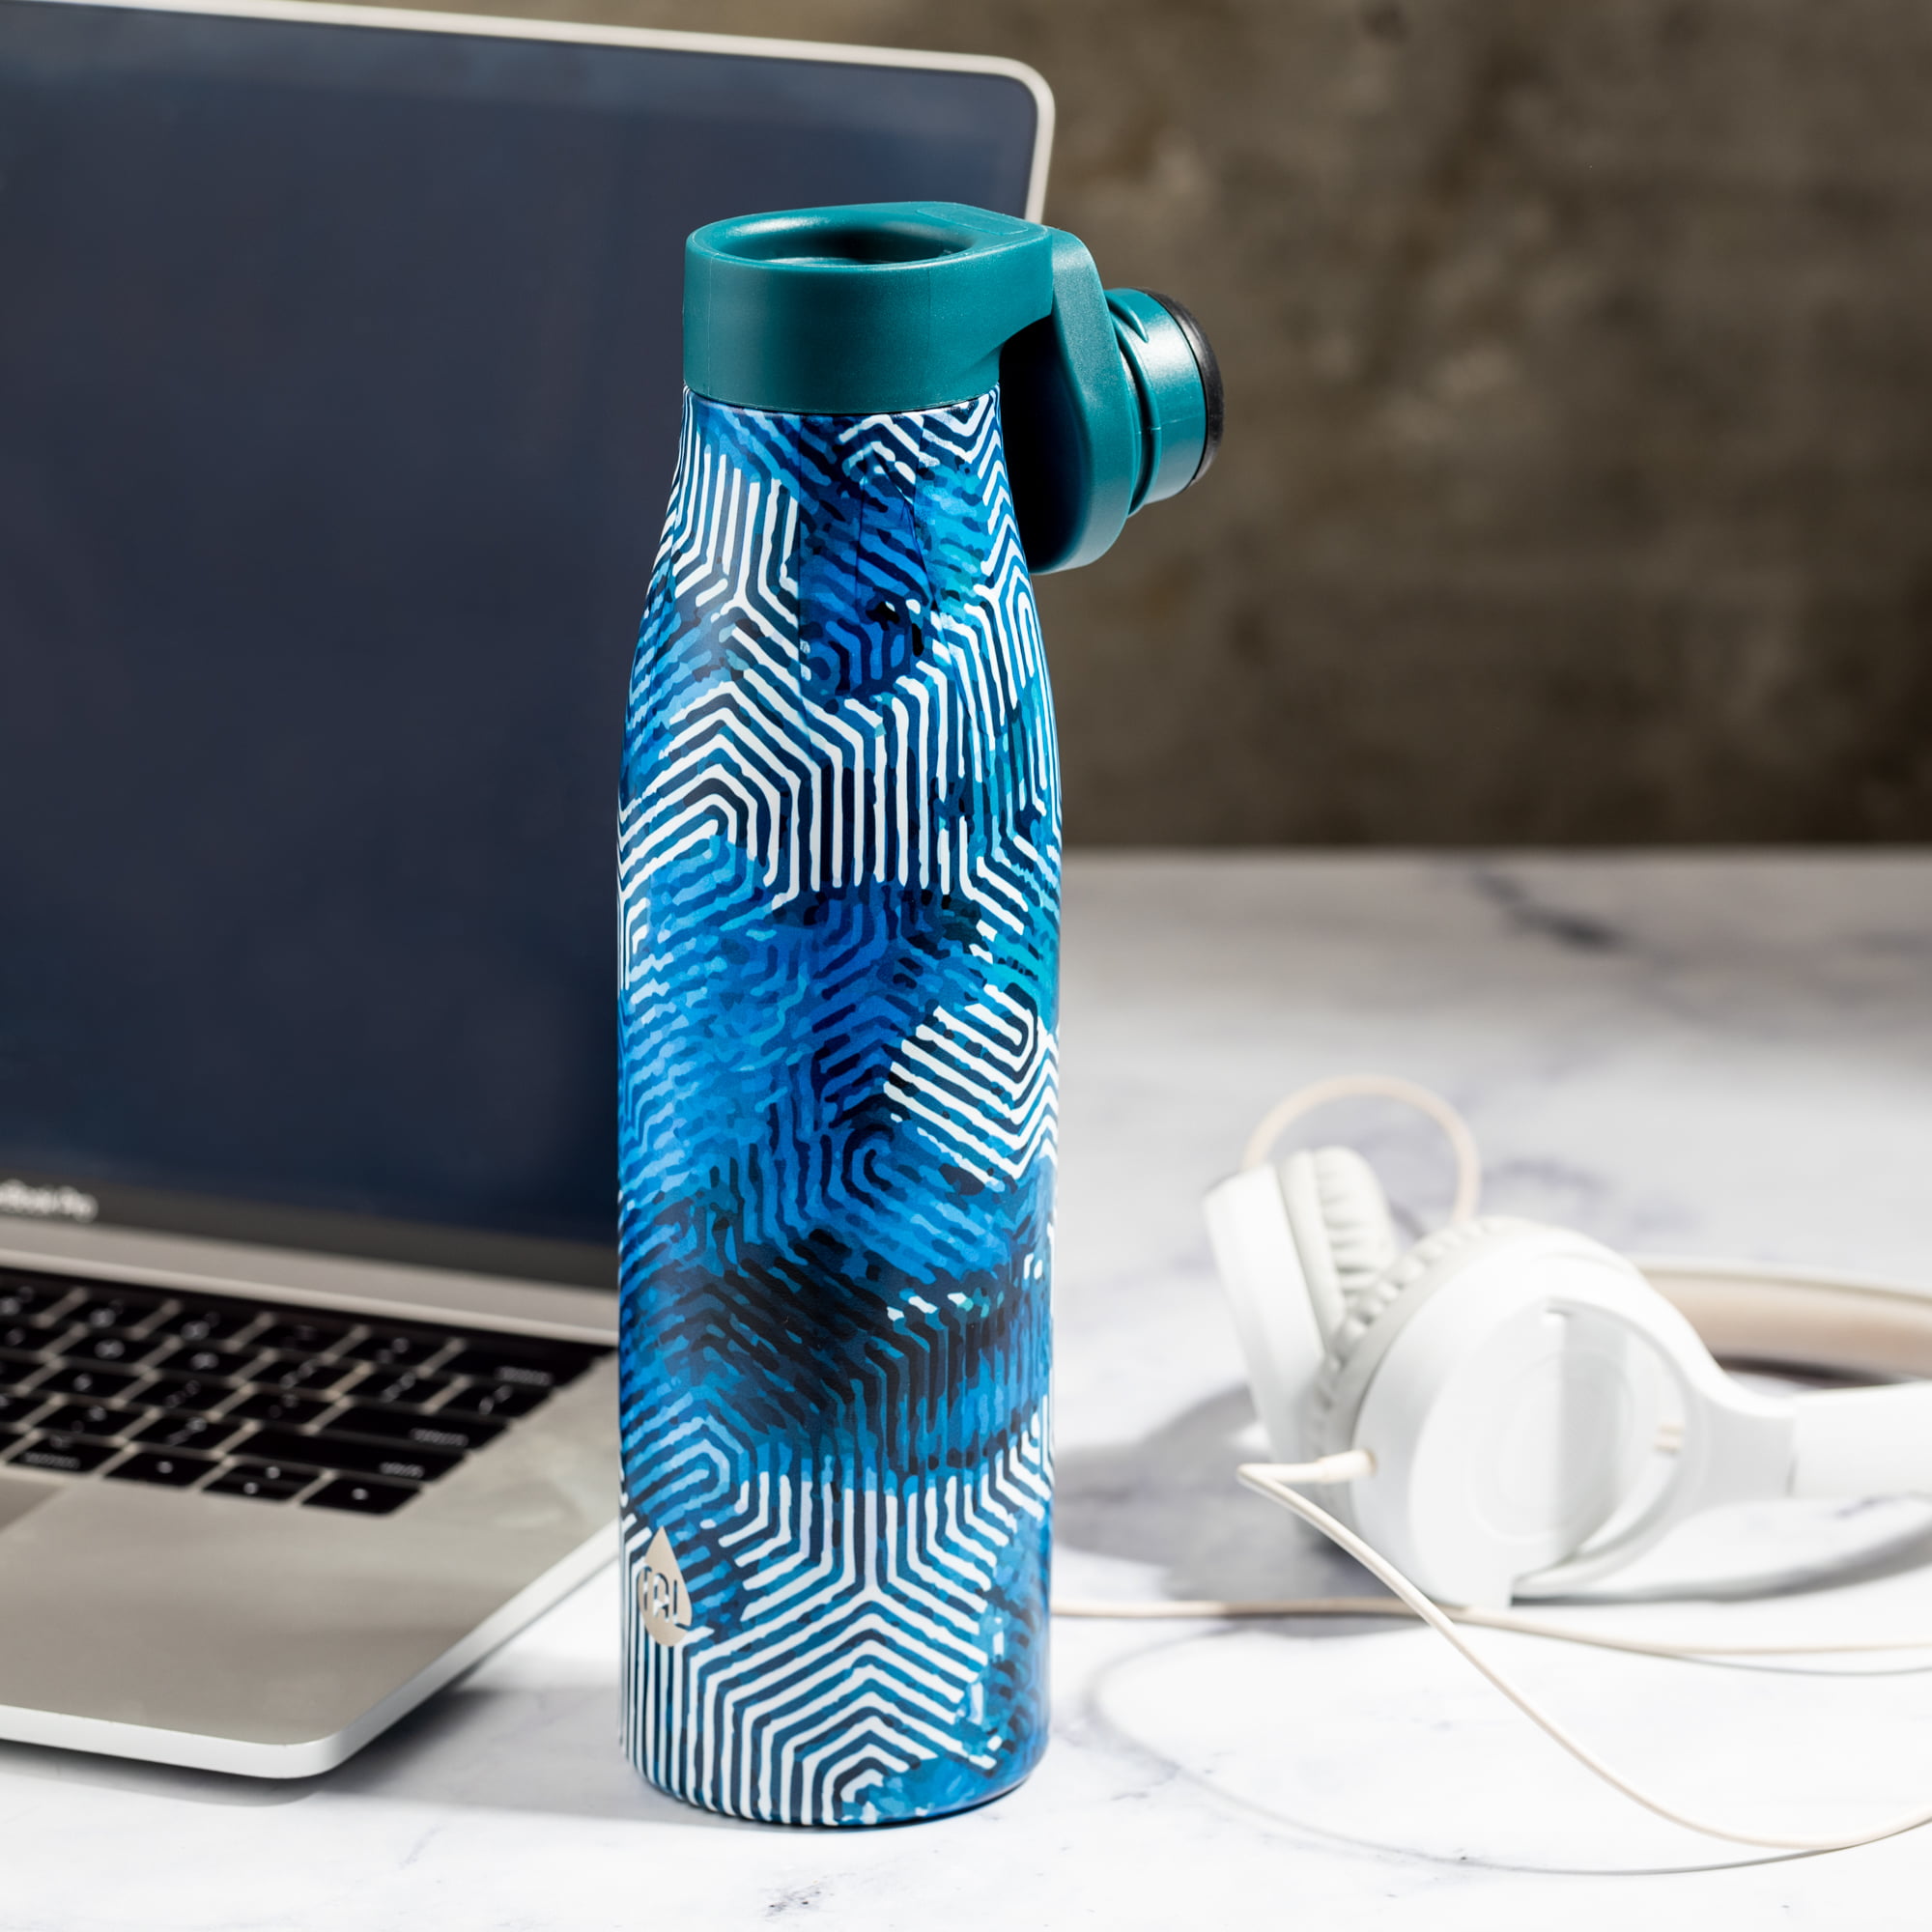 mioki tumbler water bottle offer｜TikTok Search